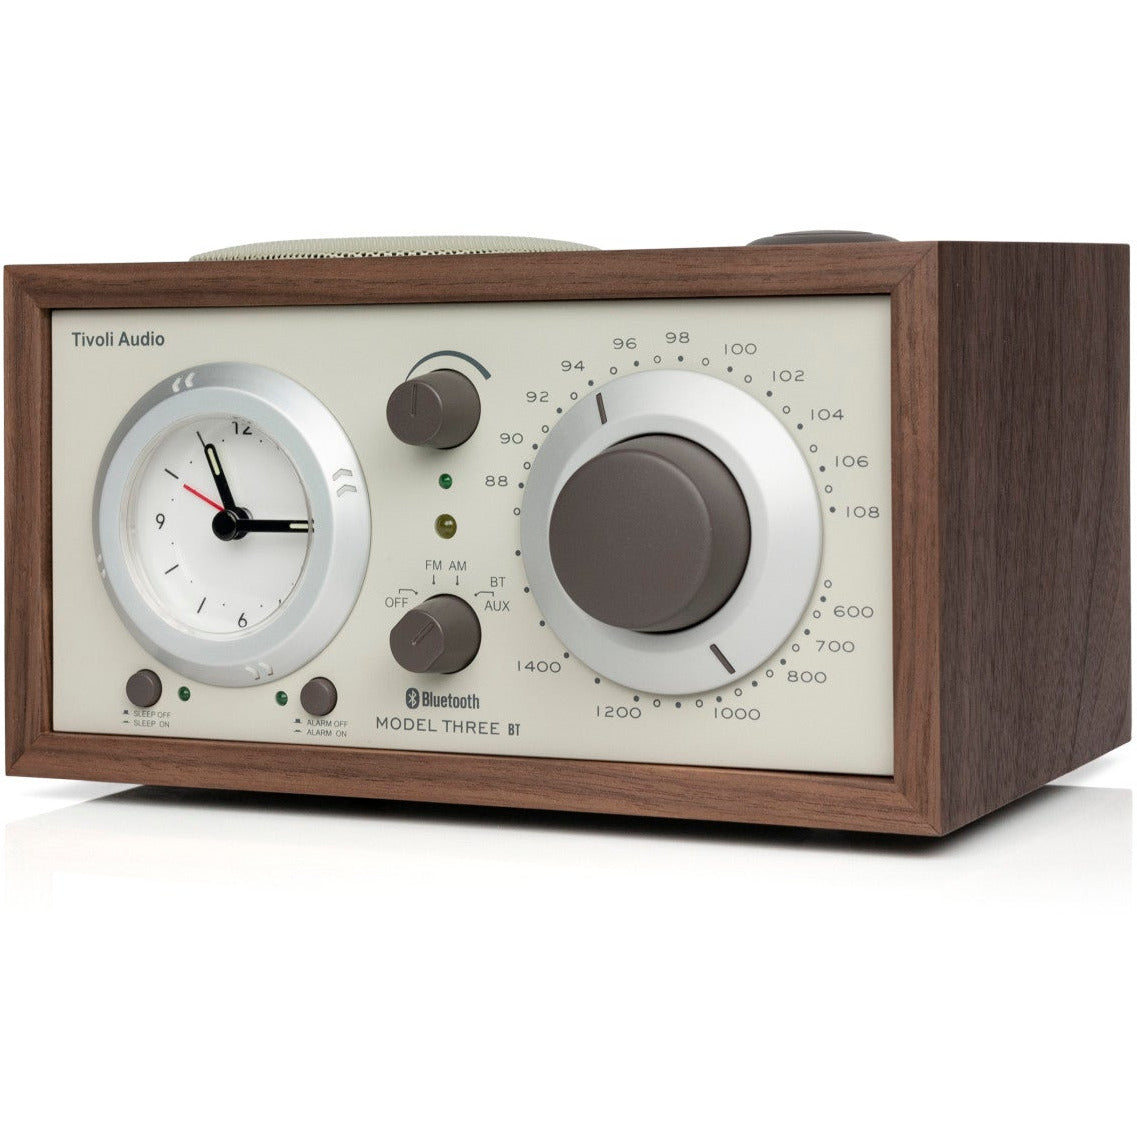 Tivoli Audio MODEL THREE BT Bluetooth AM/FM Clock Radio